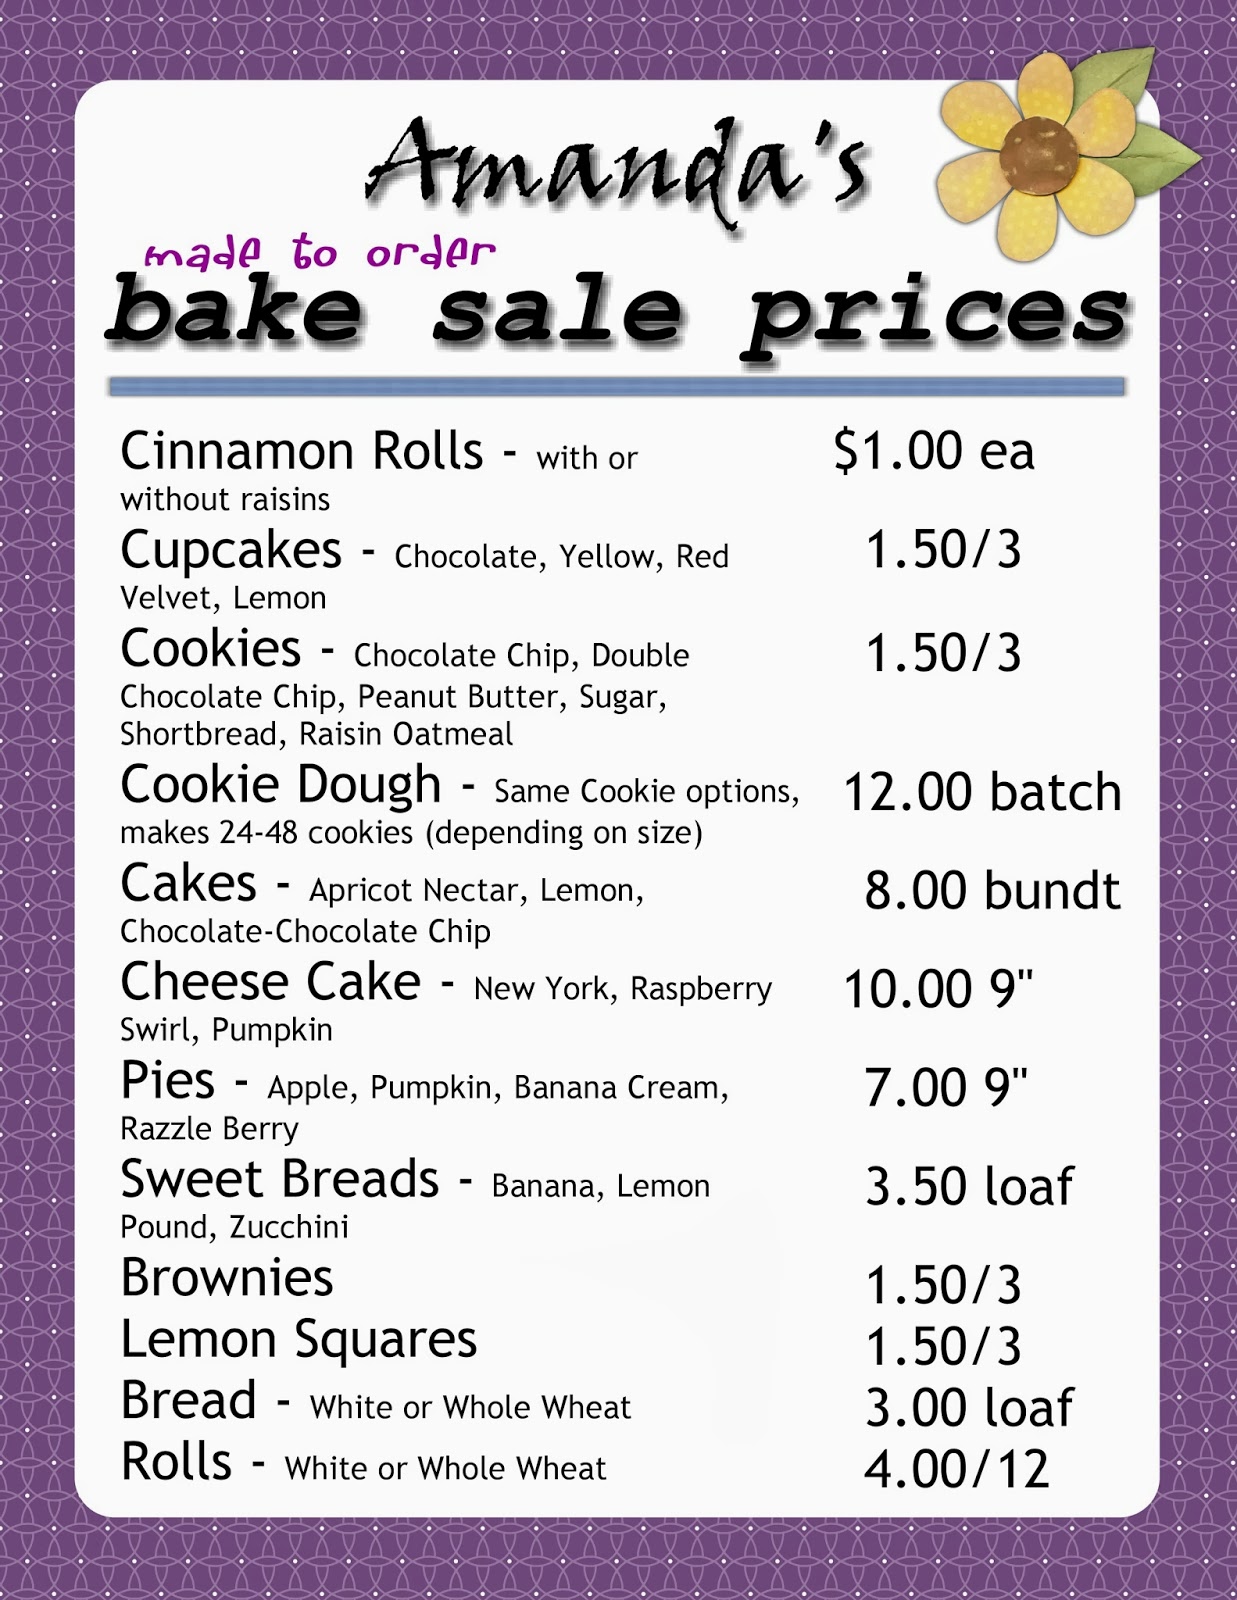 Bake Sale Price List Template